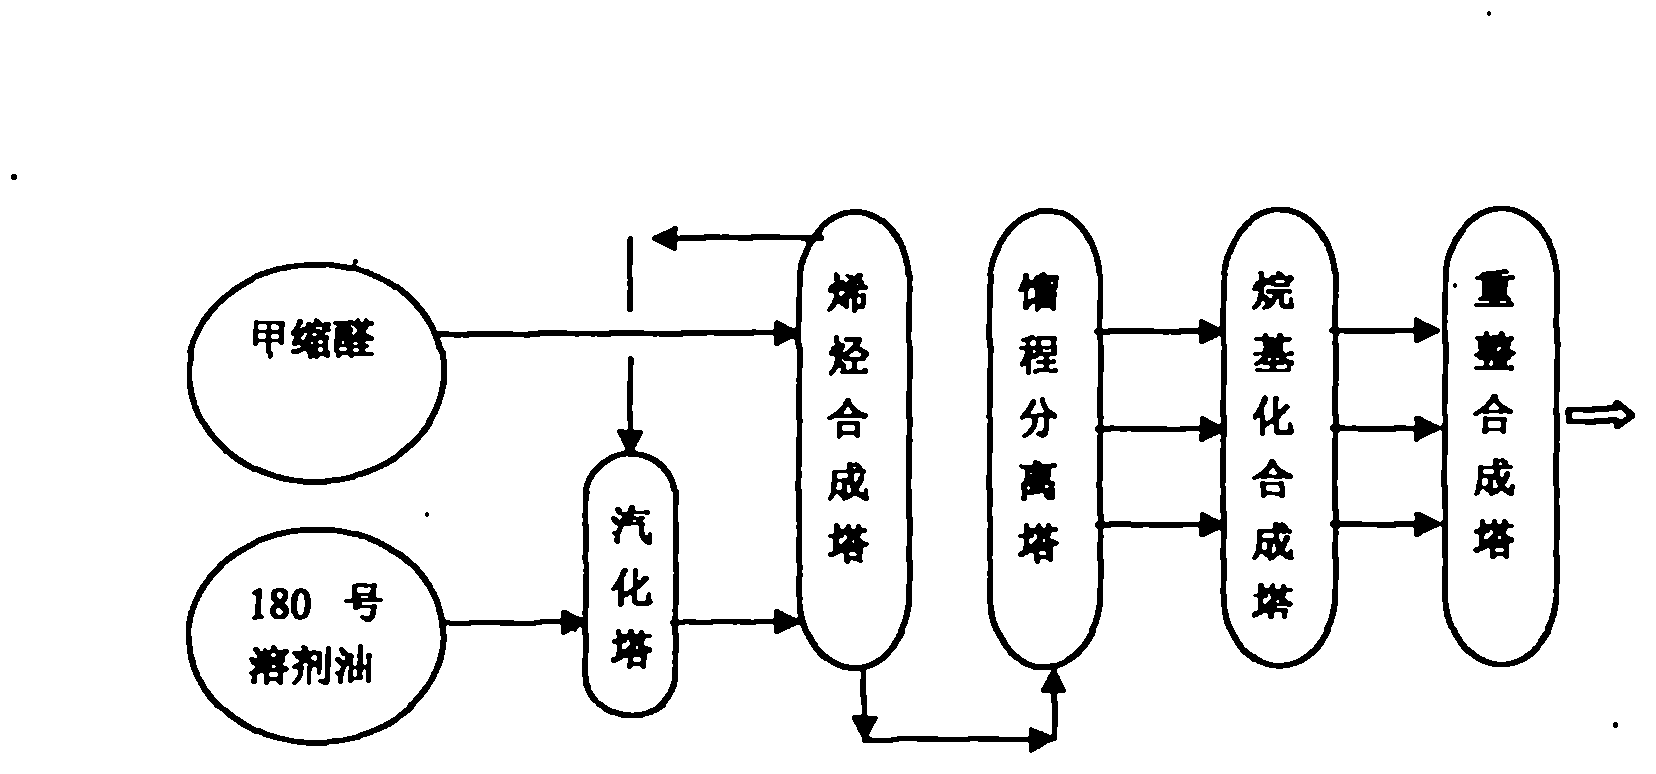 Method for preparing alkylation gasoline through polycondensation of methanol